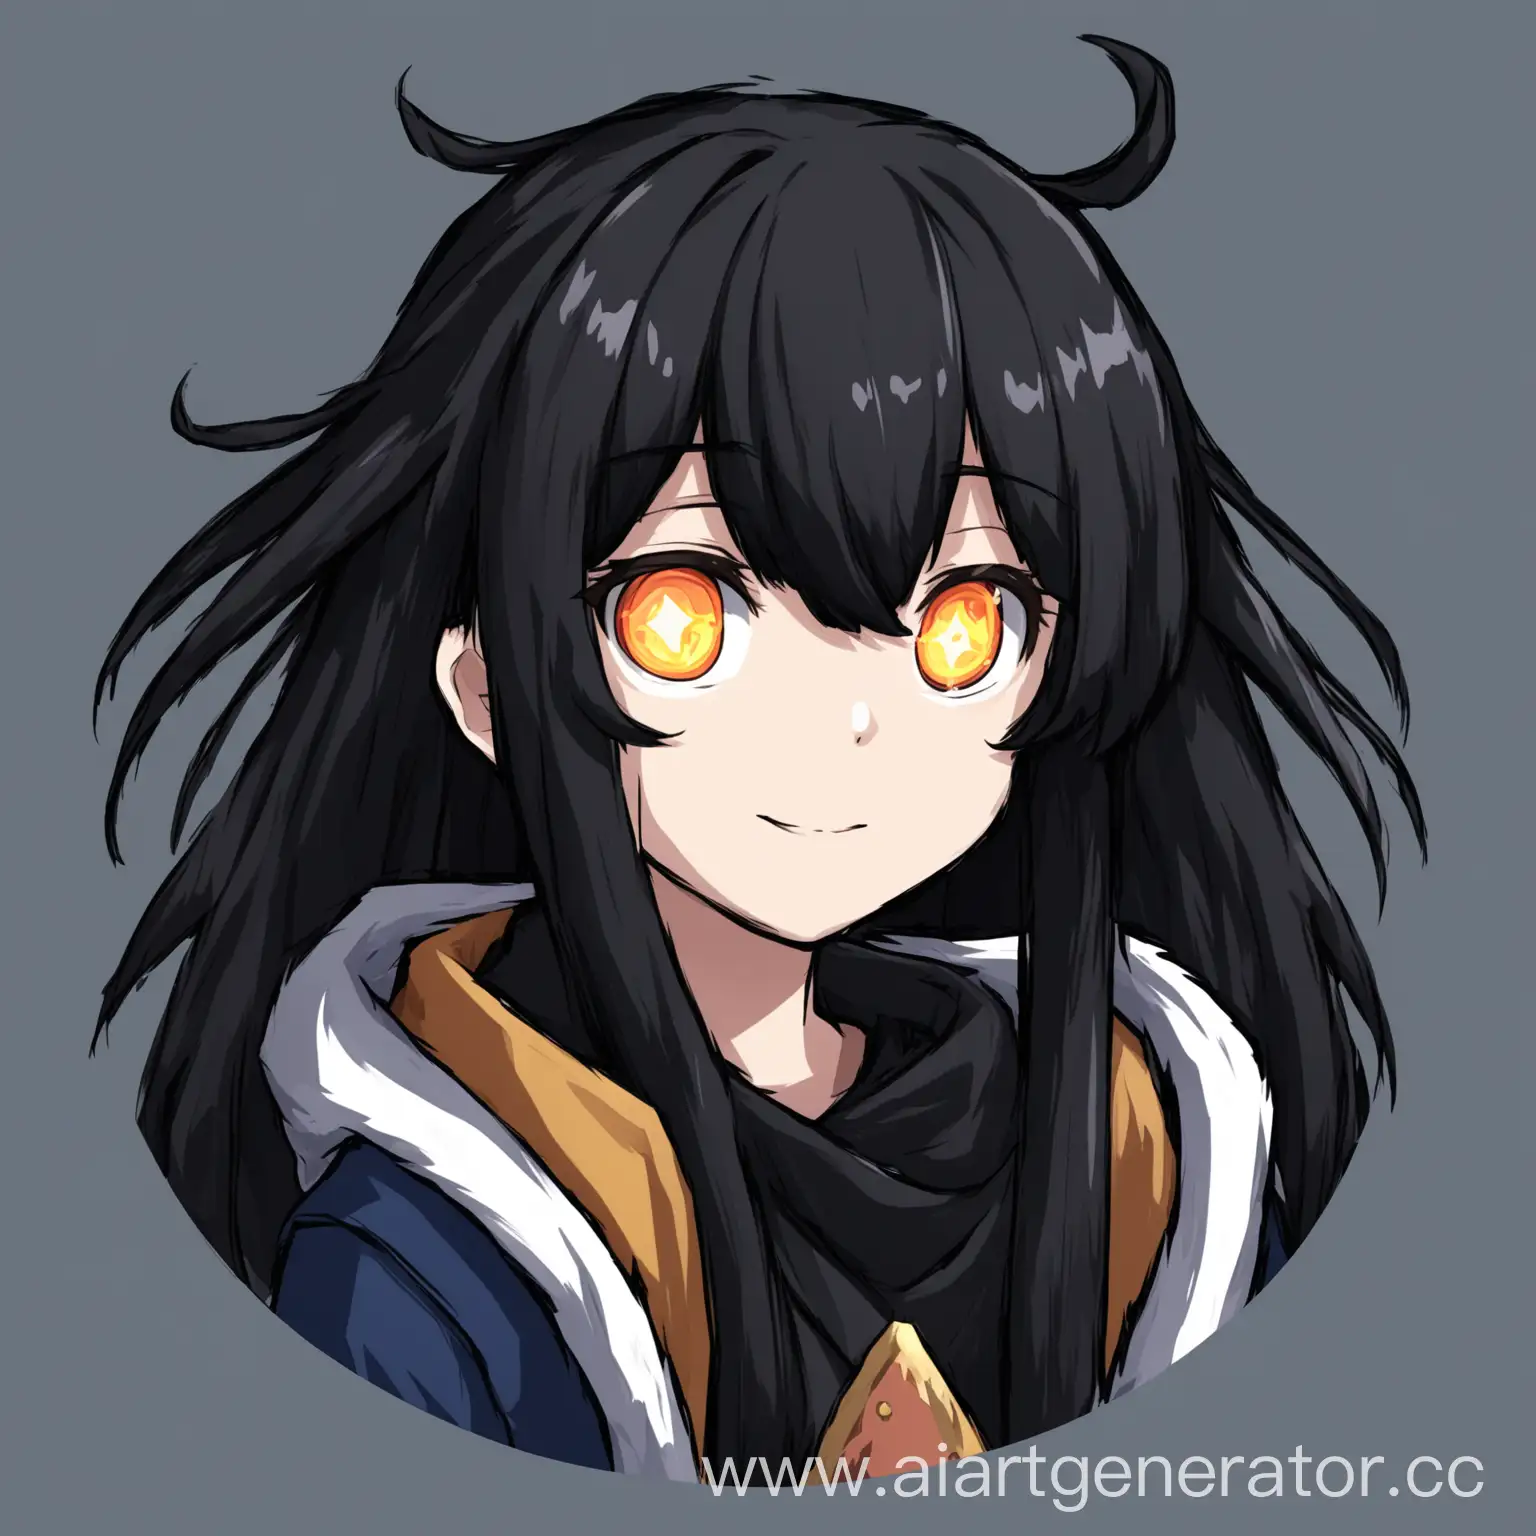 Create me an unusual anime avatar for the discord platform